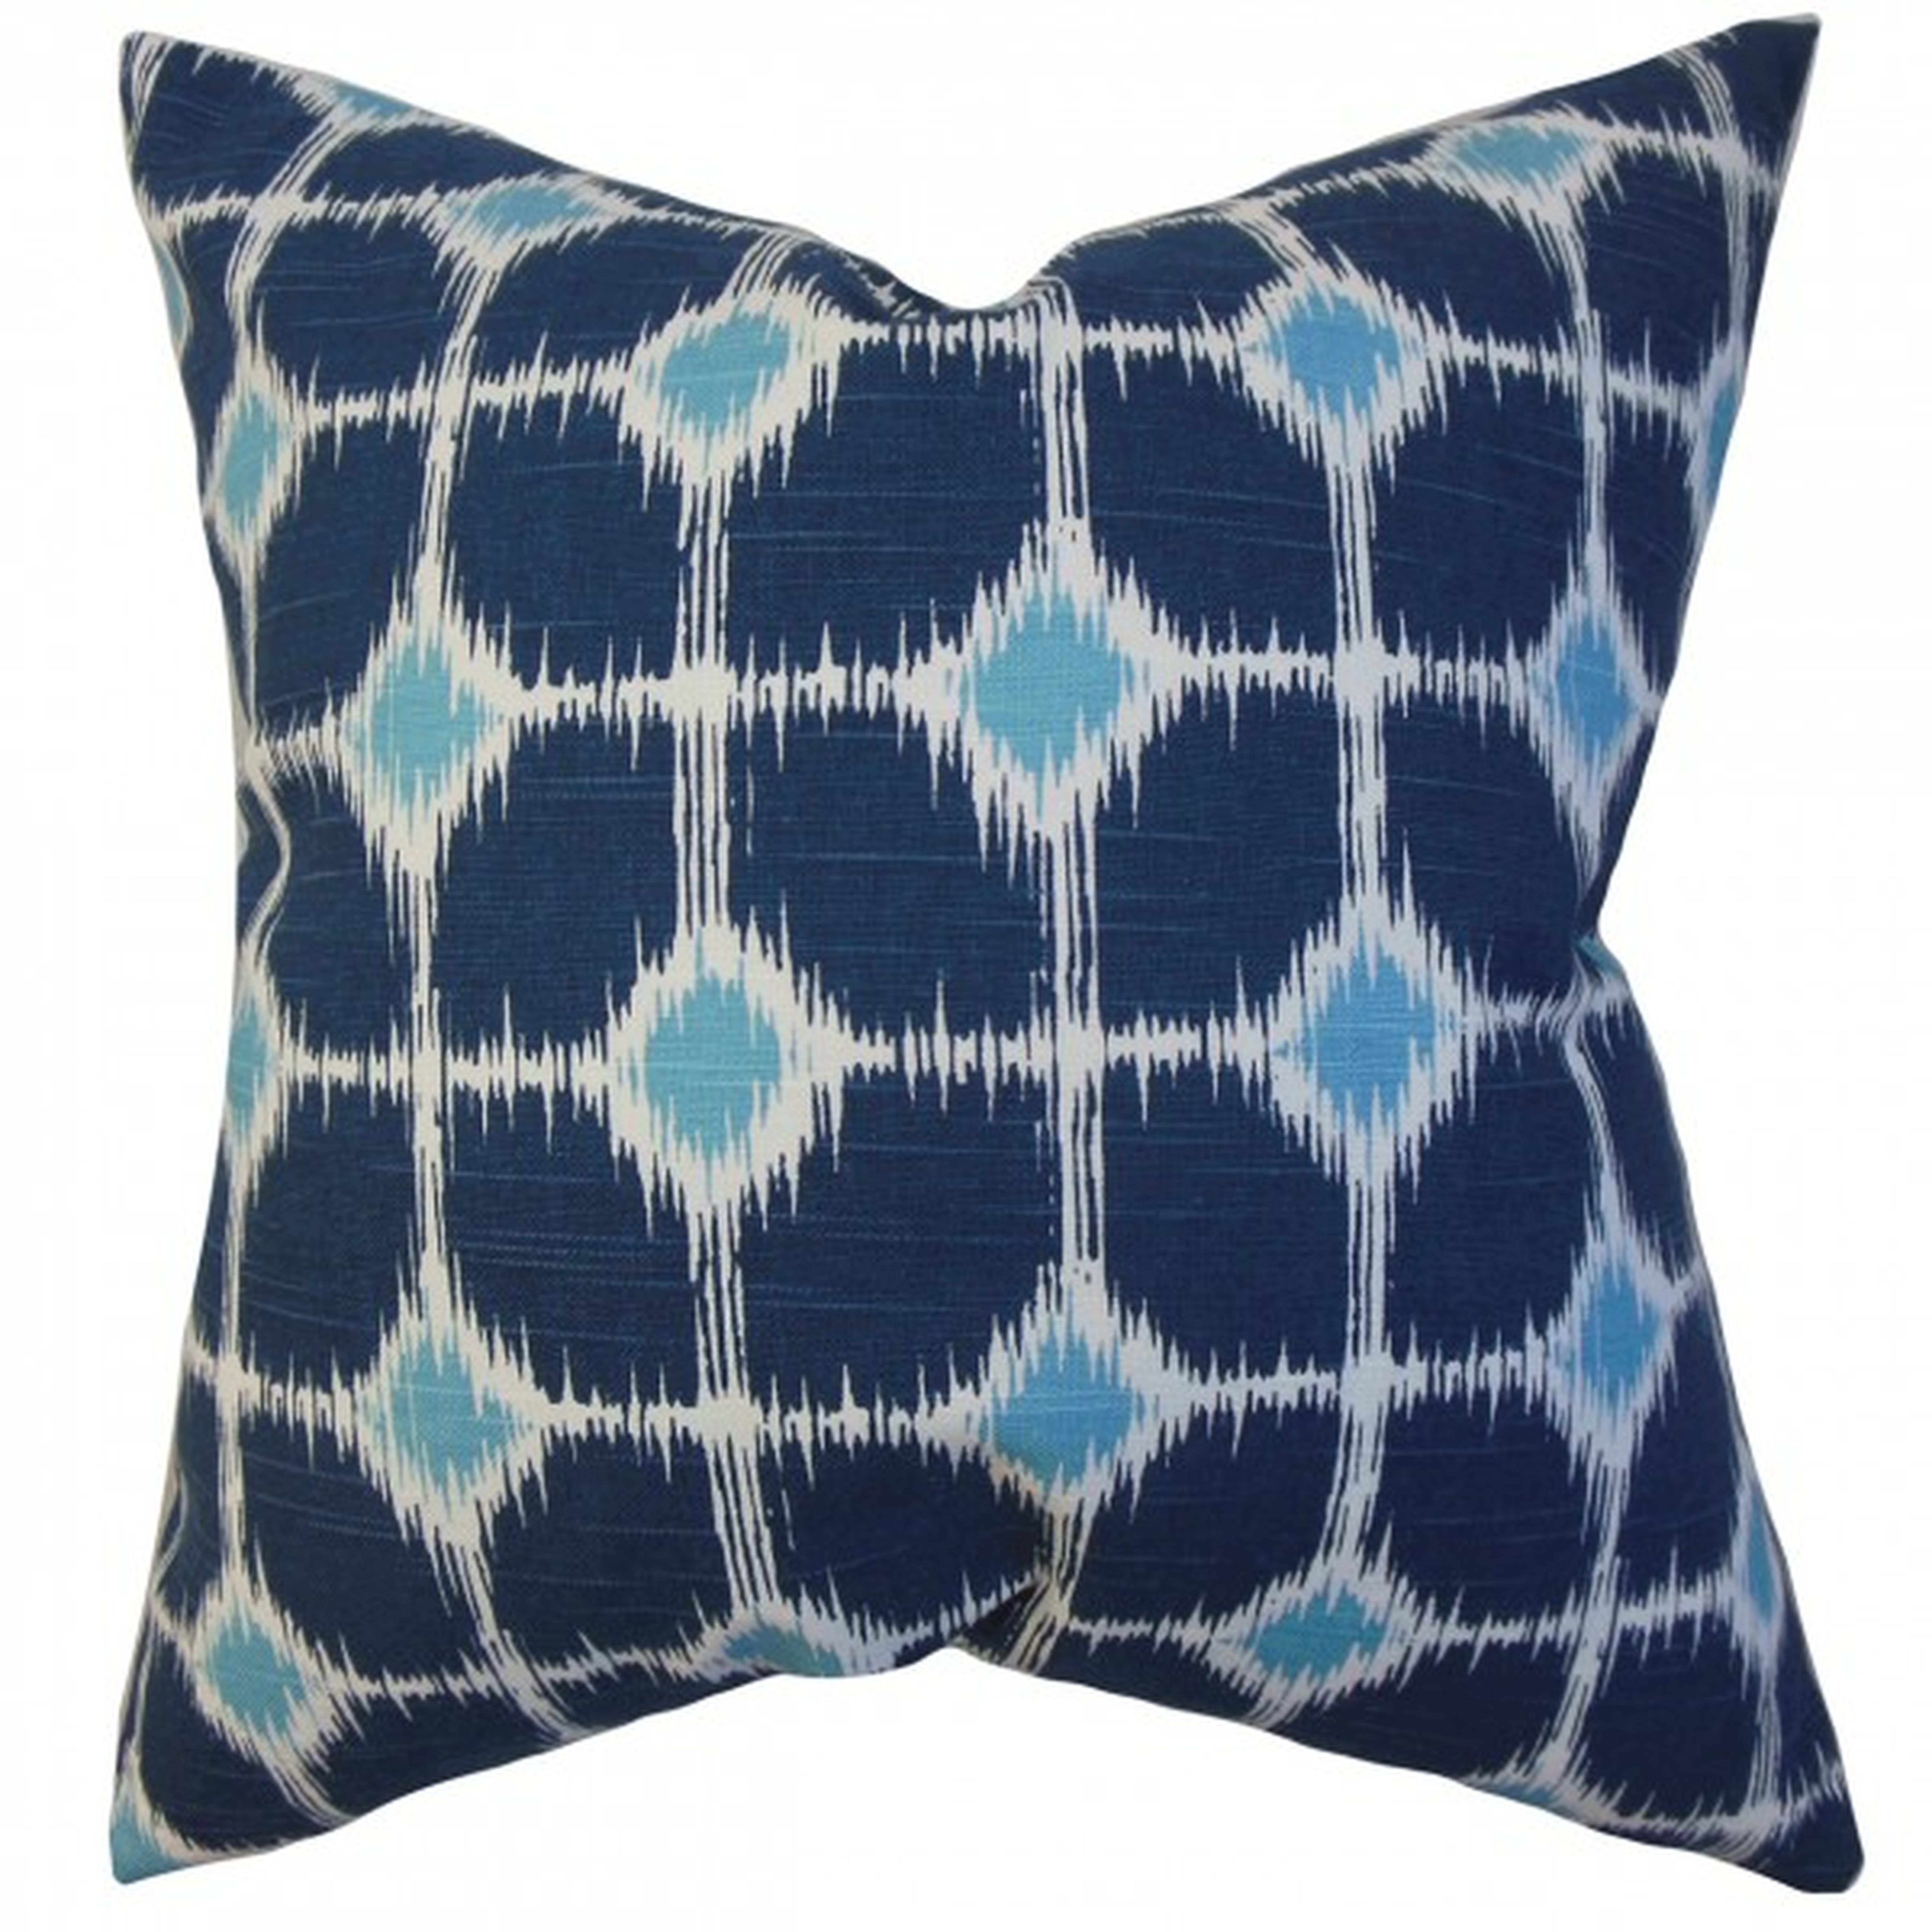 Kyd Geometric Pillow Blue - 18" x 18" - Polyester Insert - Linen & Seam